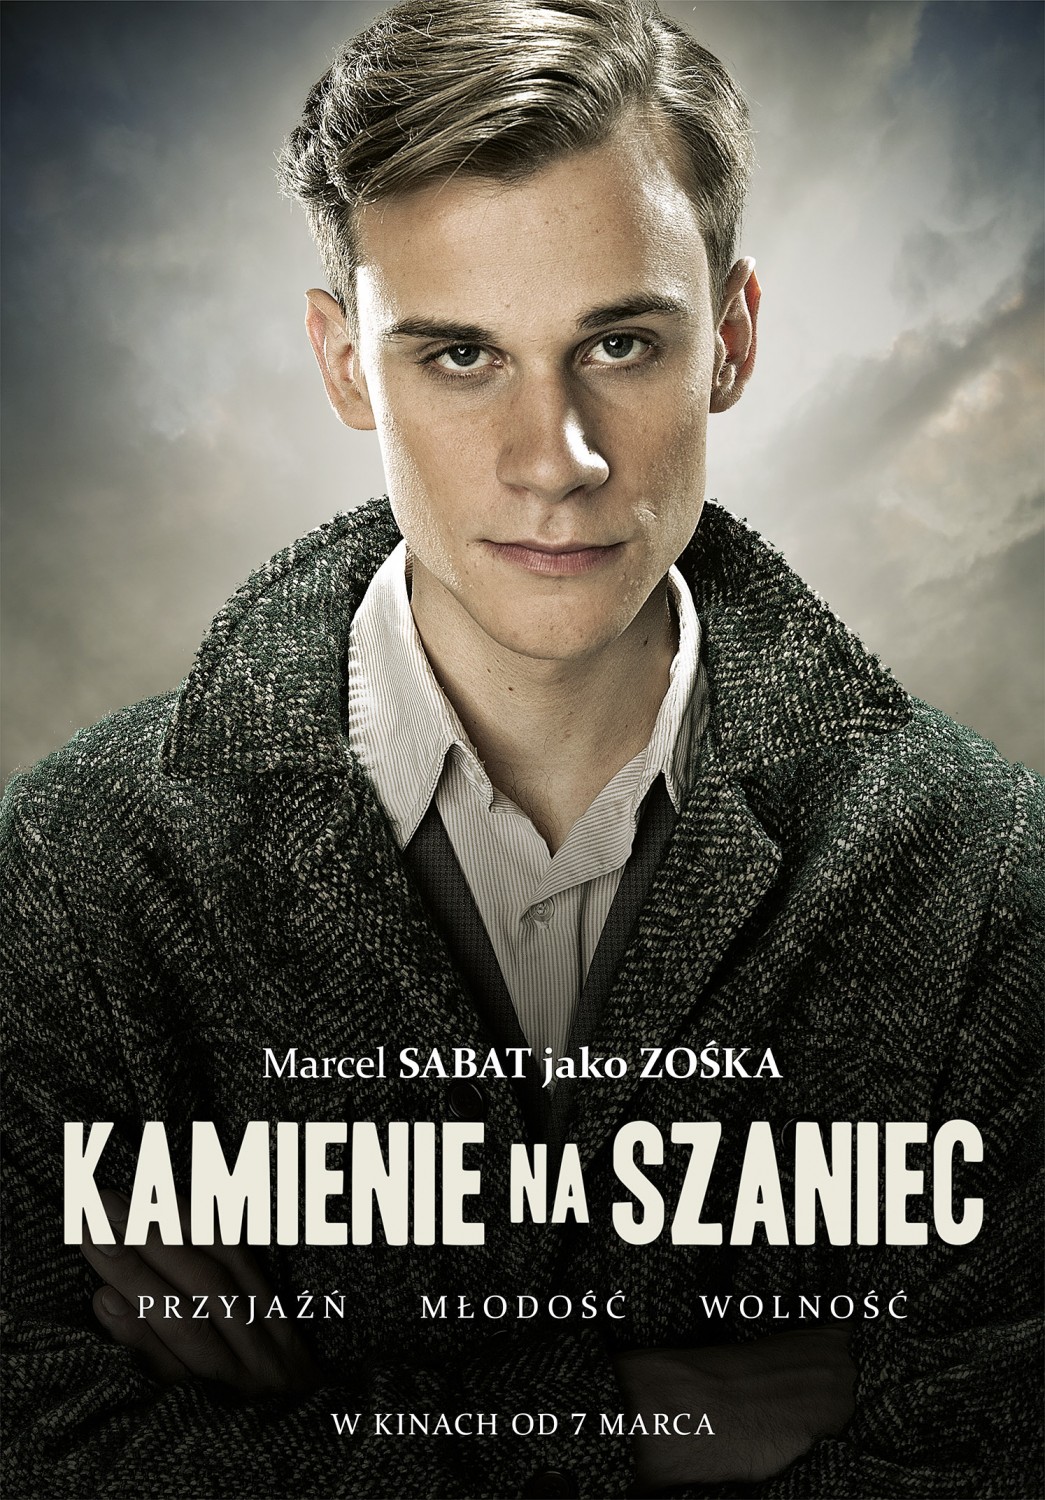 Extra Large Movie Poster Image for Kamienie na szaniec (#2 of 8)